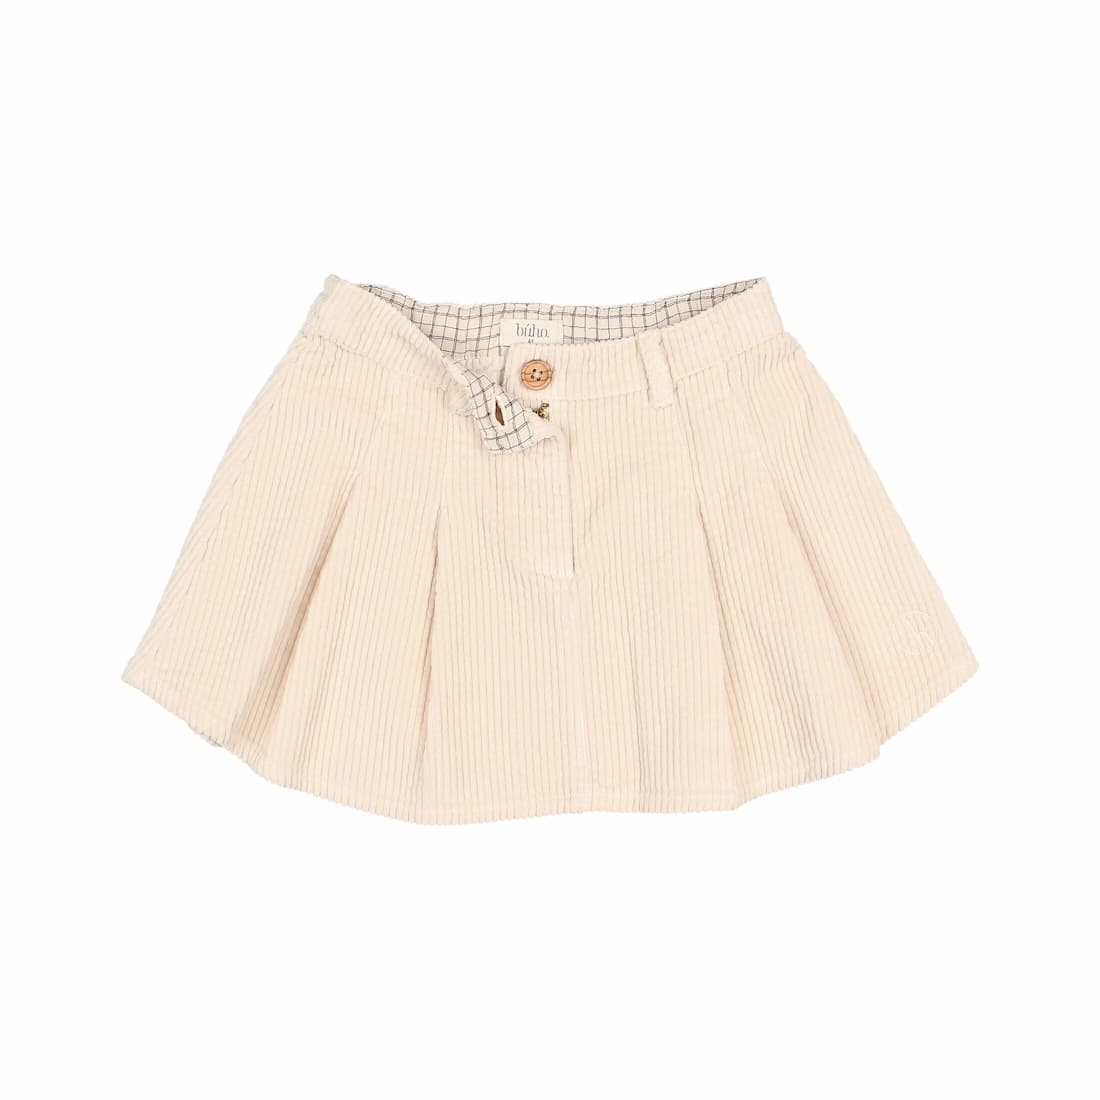 Box Pleat Skirt (Sand)